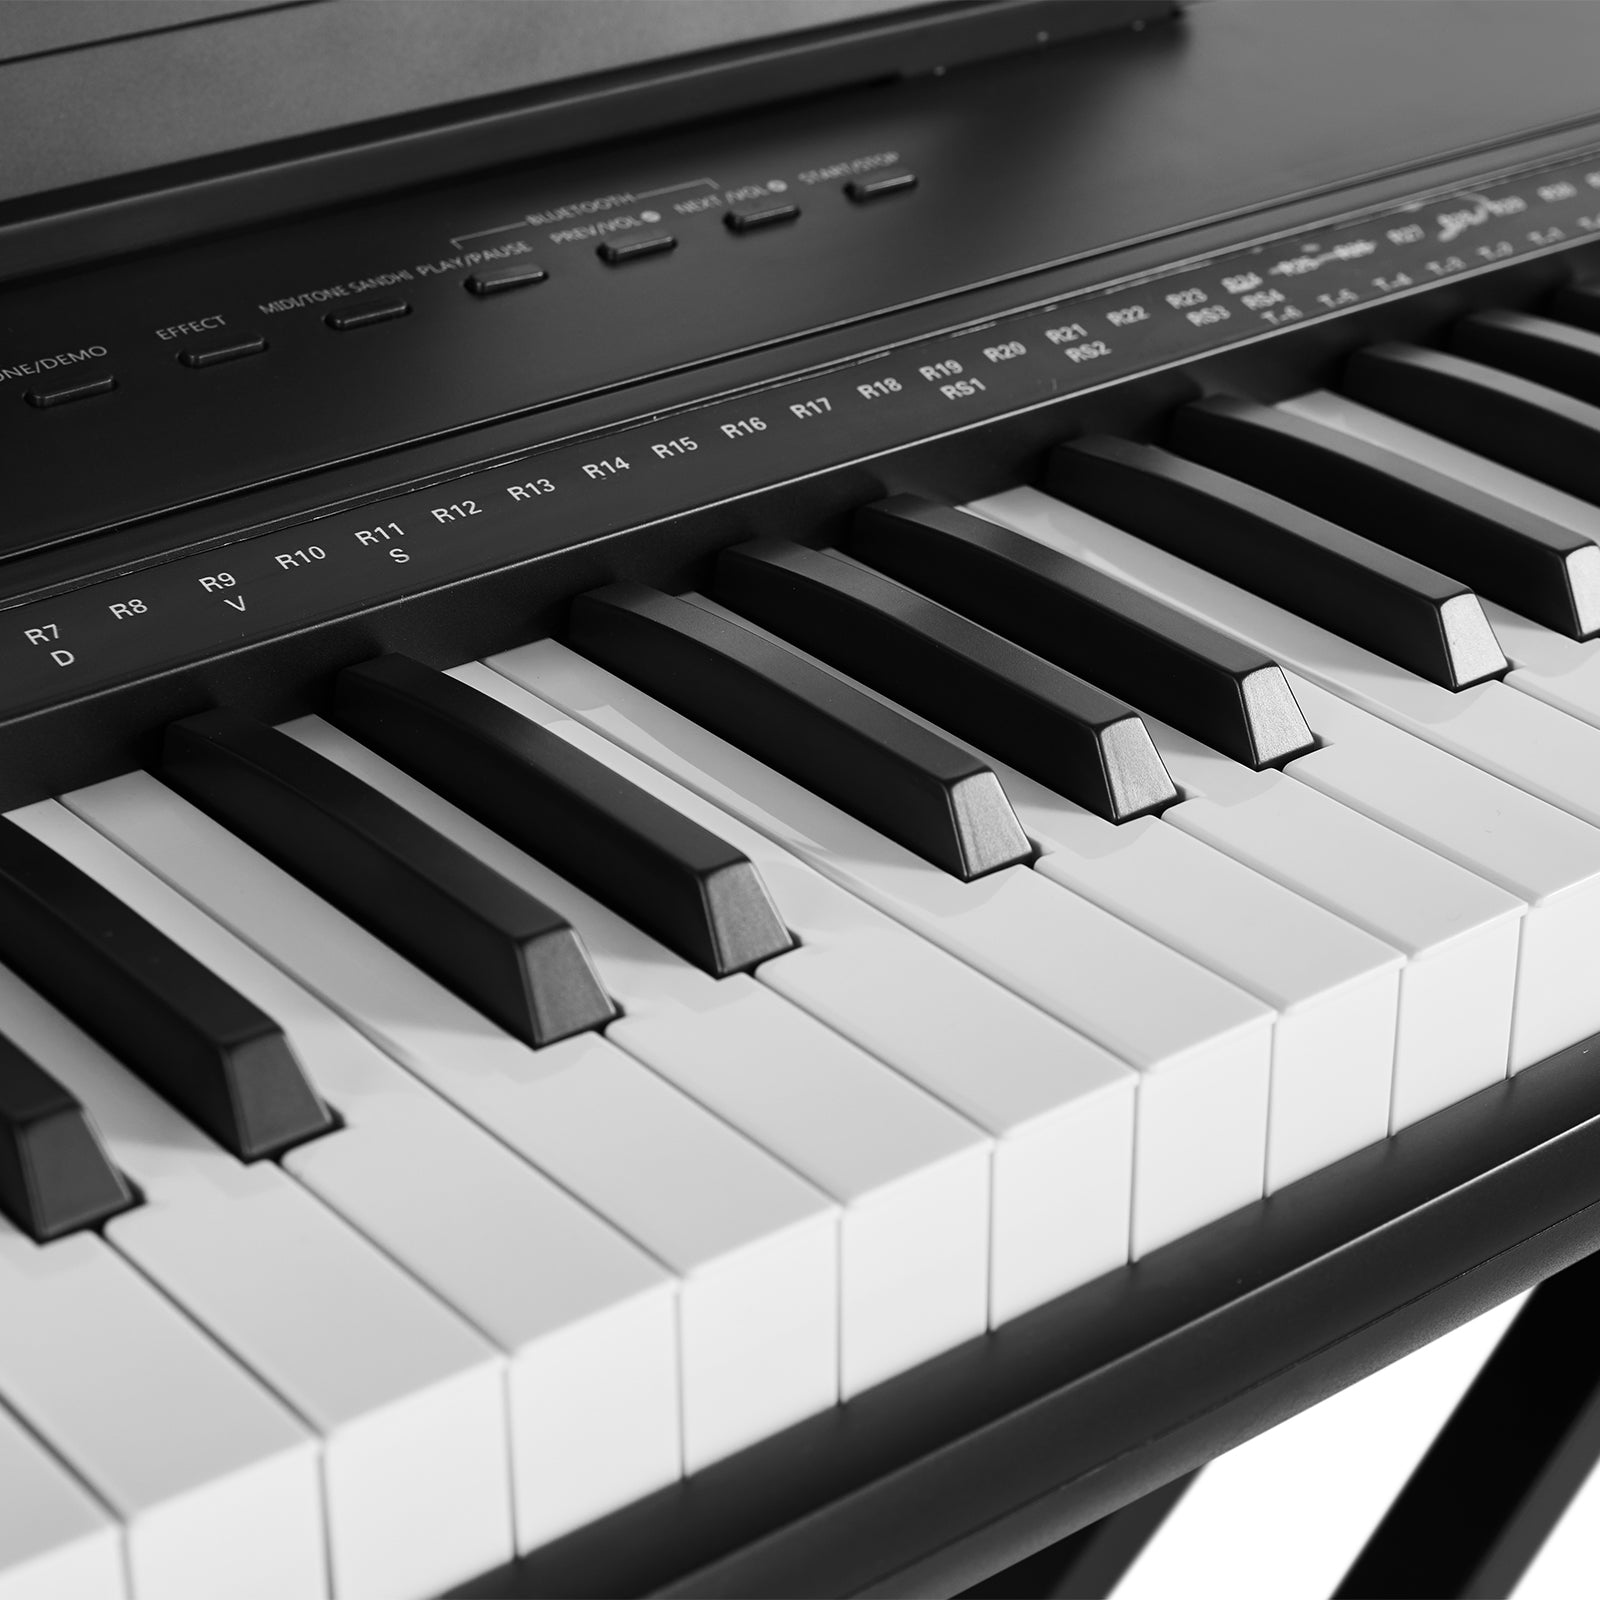 Legemcharr 88 Key Piano Keyboard Electric Piano Digital Piano